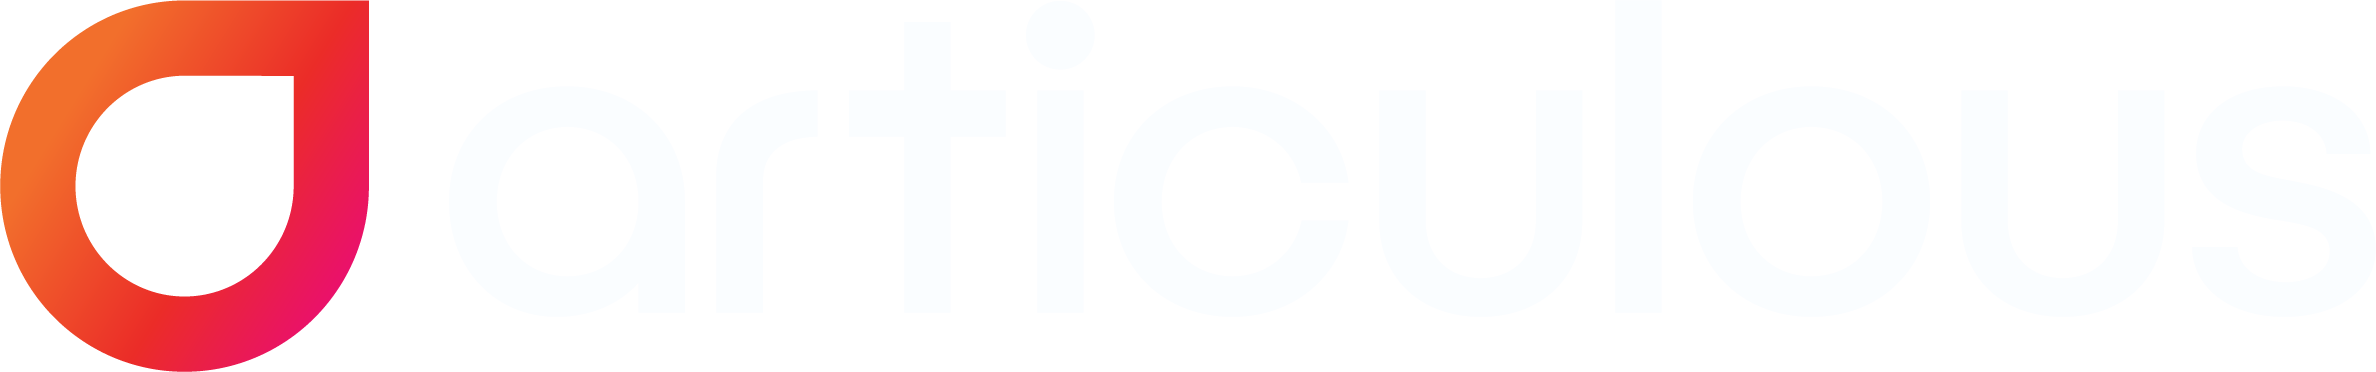 Articulous logo